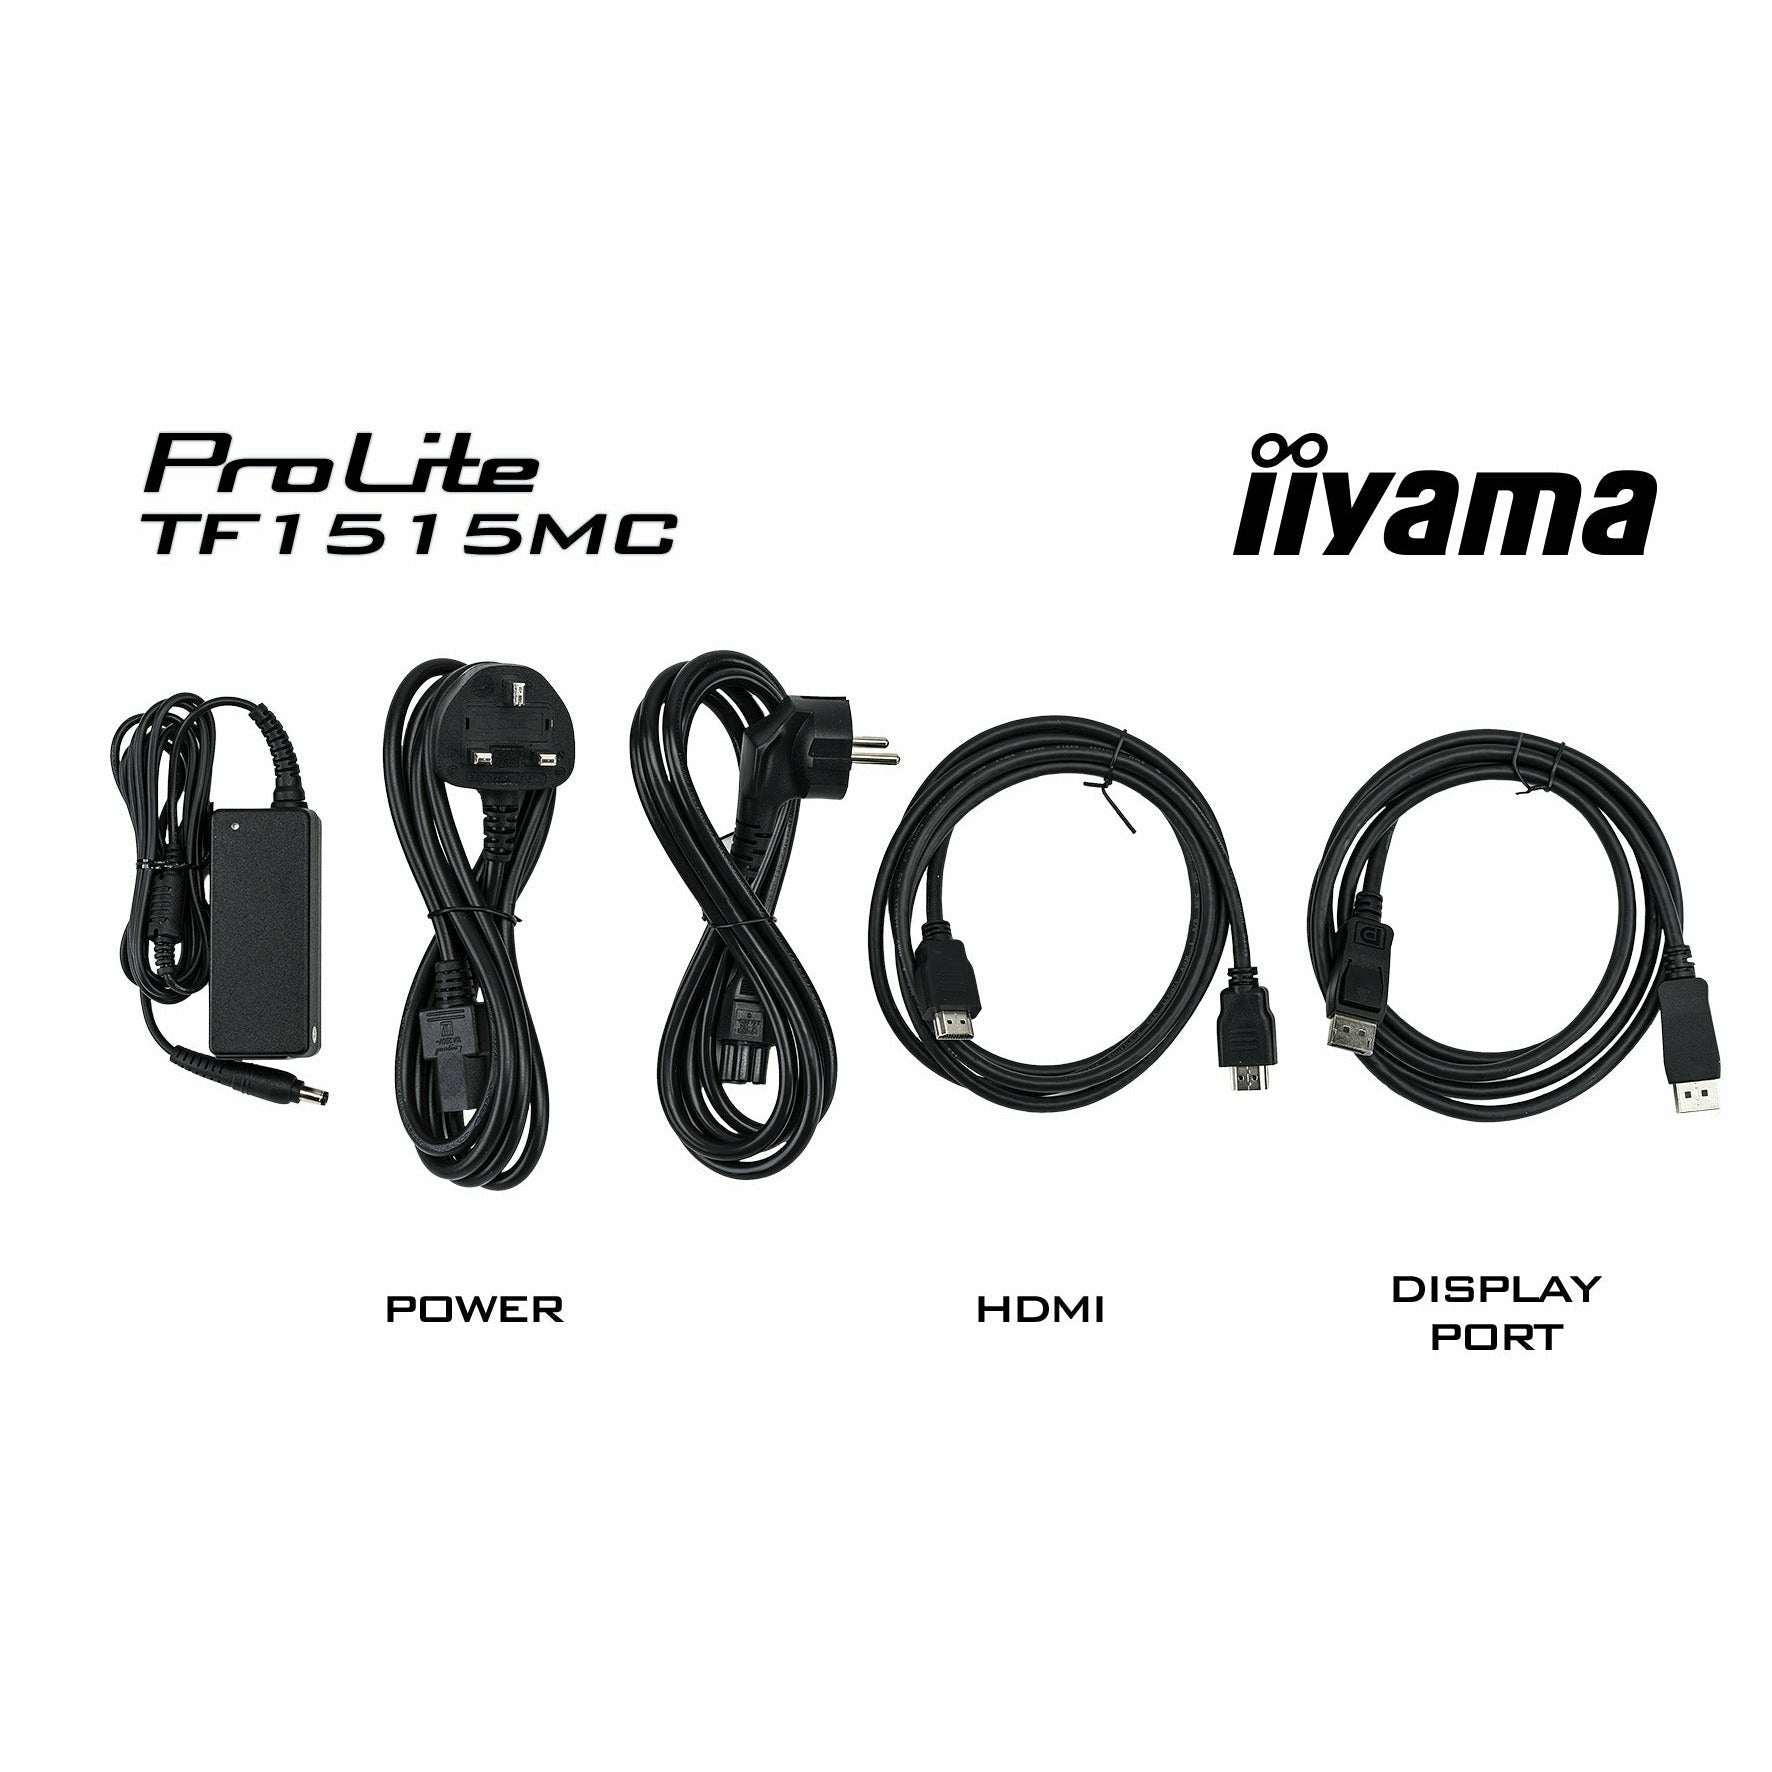 iiyama ProLite TF1515MC-B2 15" Capacitive Touch Screen Display